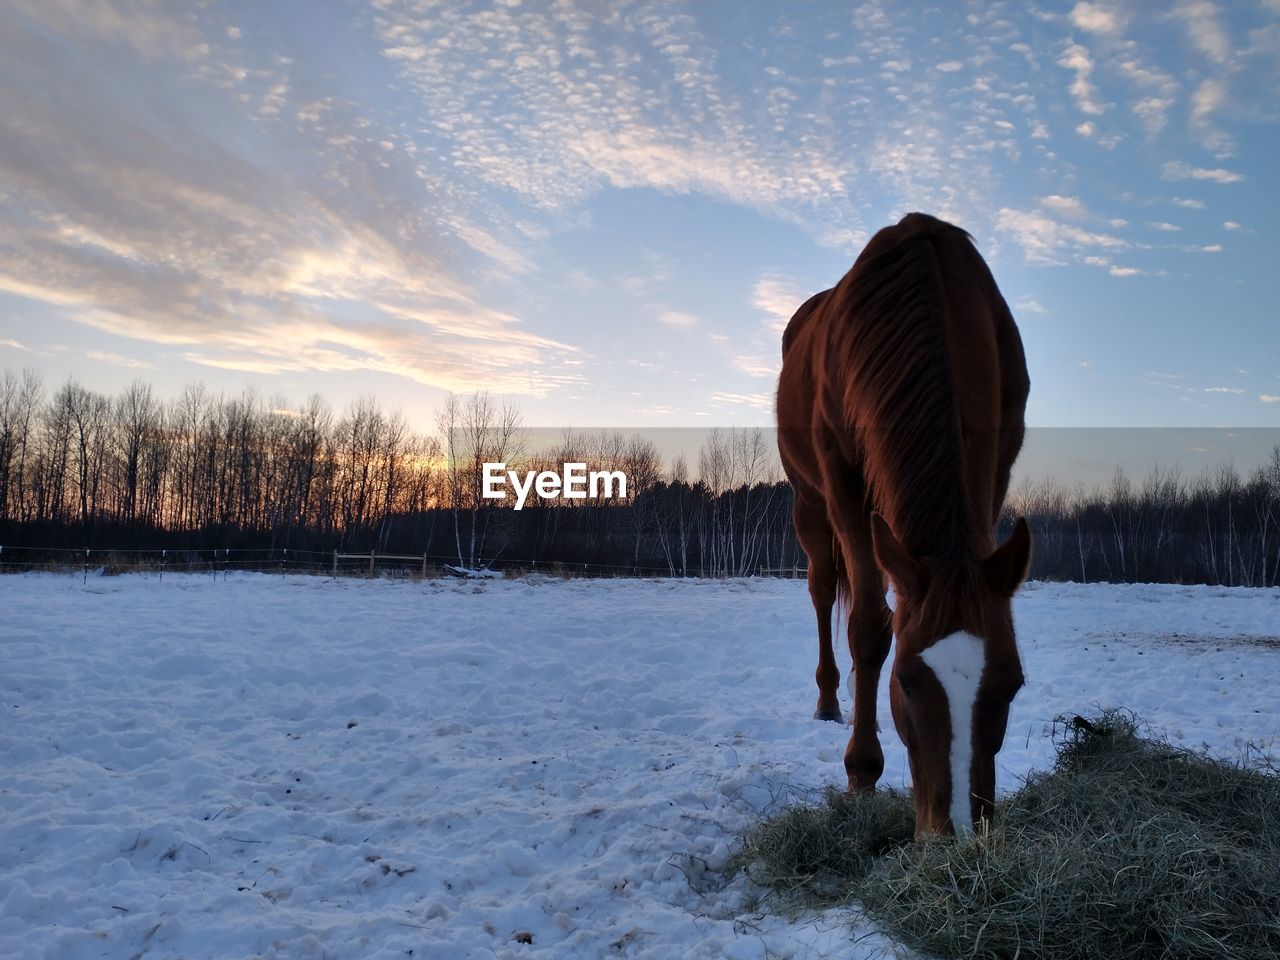 Horse grazing on snowy evening